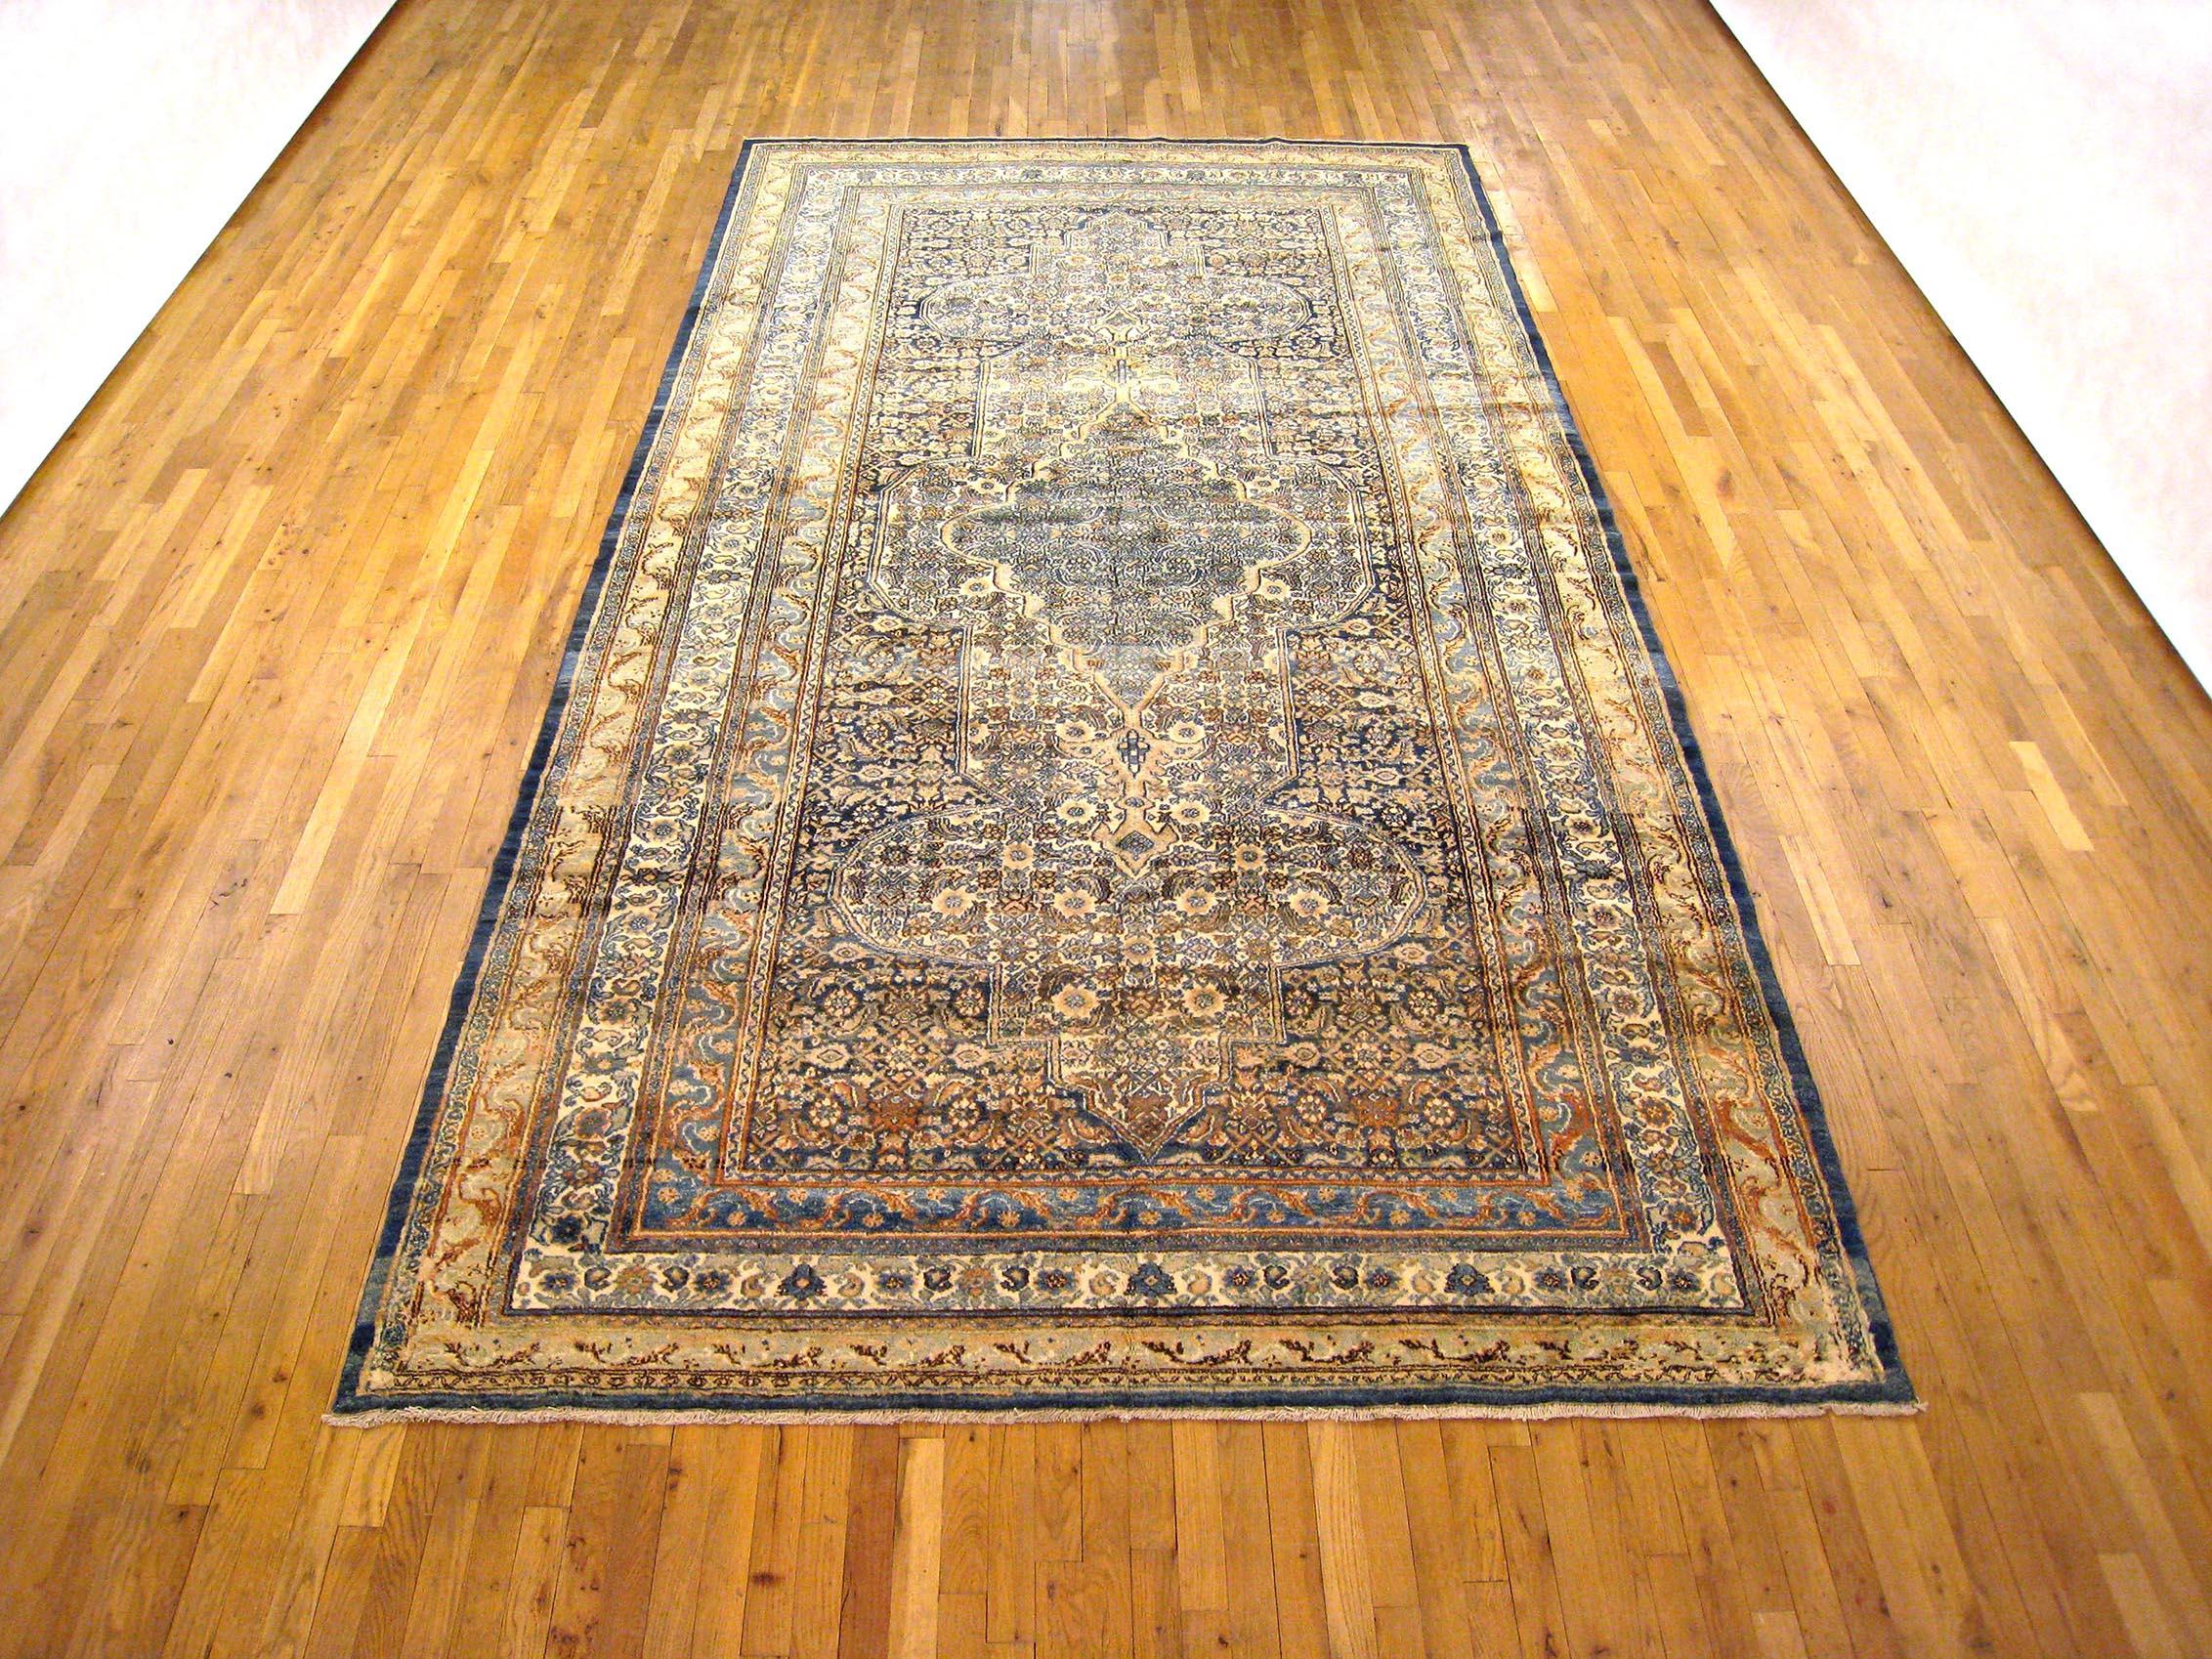 Antique Persian Bibikabad oriental rug, gallery size.

An antique Persian Bibikabad oriental rug, size 12'9